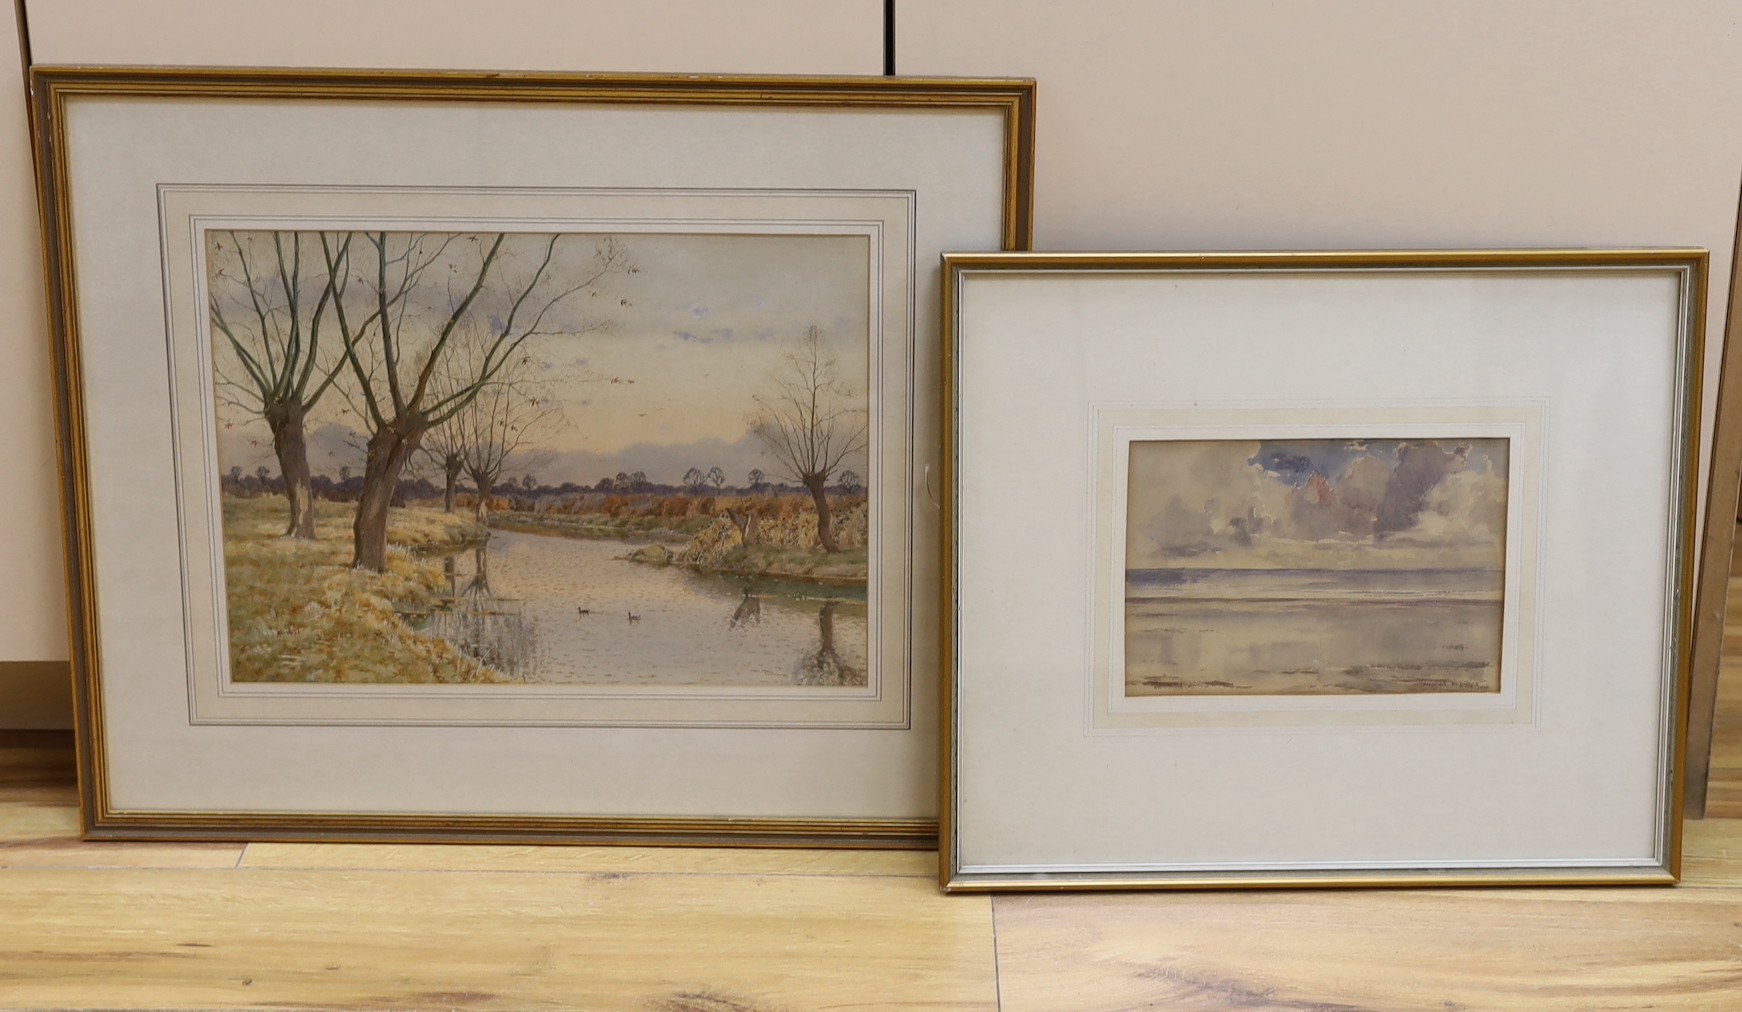 Patricia Prentice (1923-), watercolour, Coastal scene, signed, 15 x 22cm and Arthur Anderson Fraser, watercolour of ducks on a river, dated 1899, 28 x 39cm